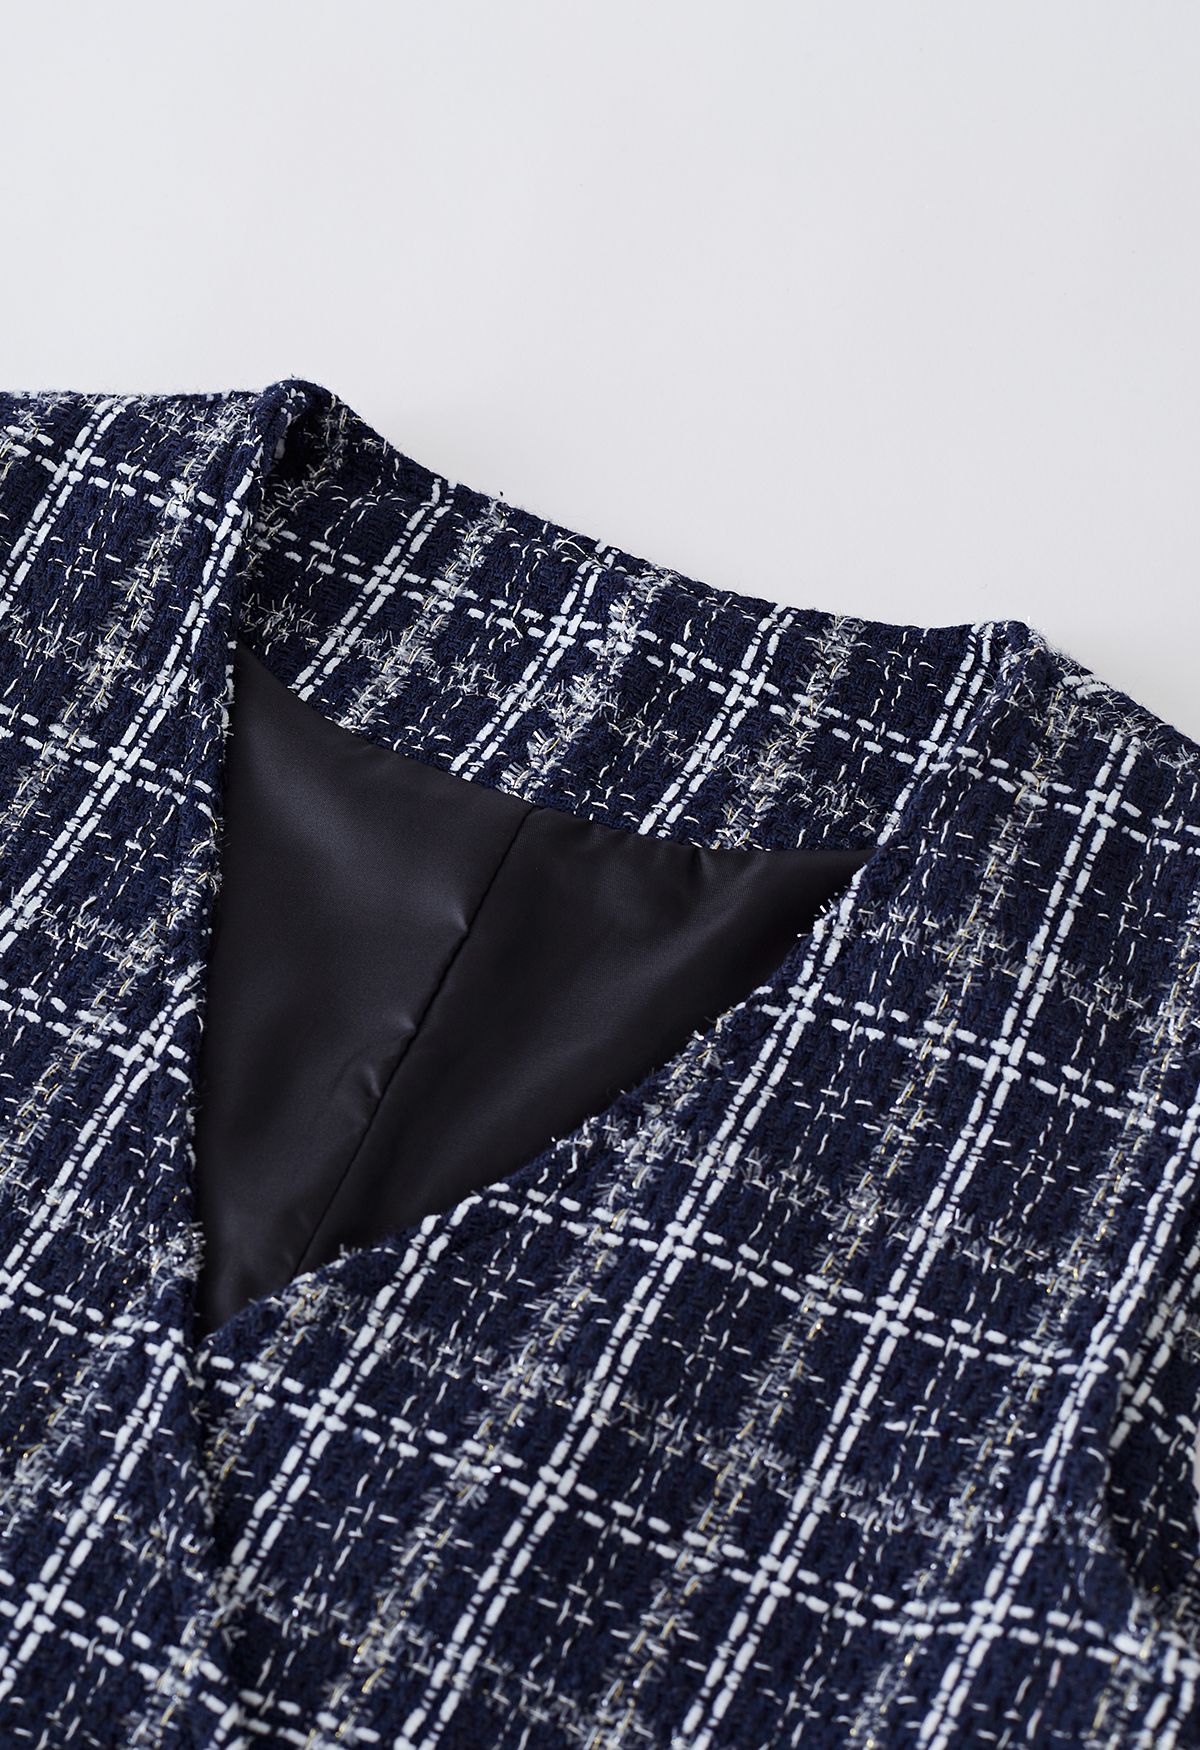 Grid Tweed Crop Jacket and Belted Sleeveless Dress Set